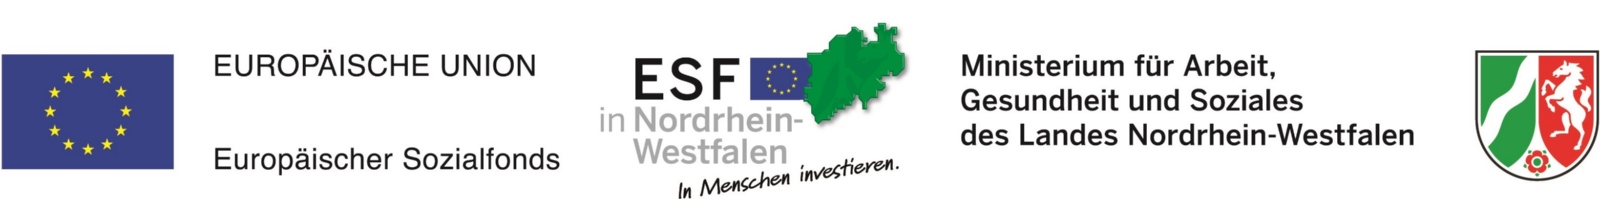 eu_esf-nrw_mags_fh_4c-logo - Kopie